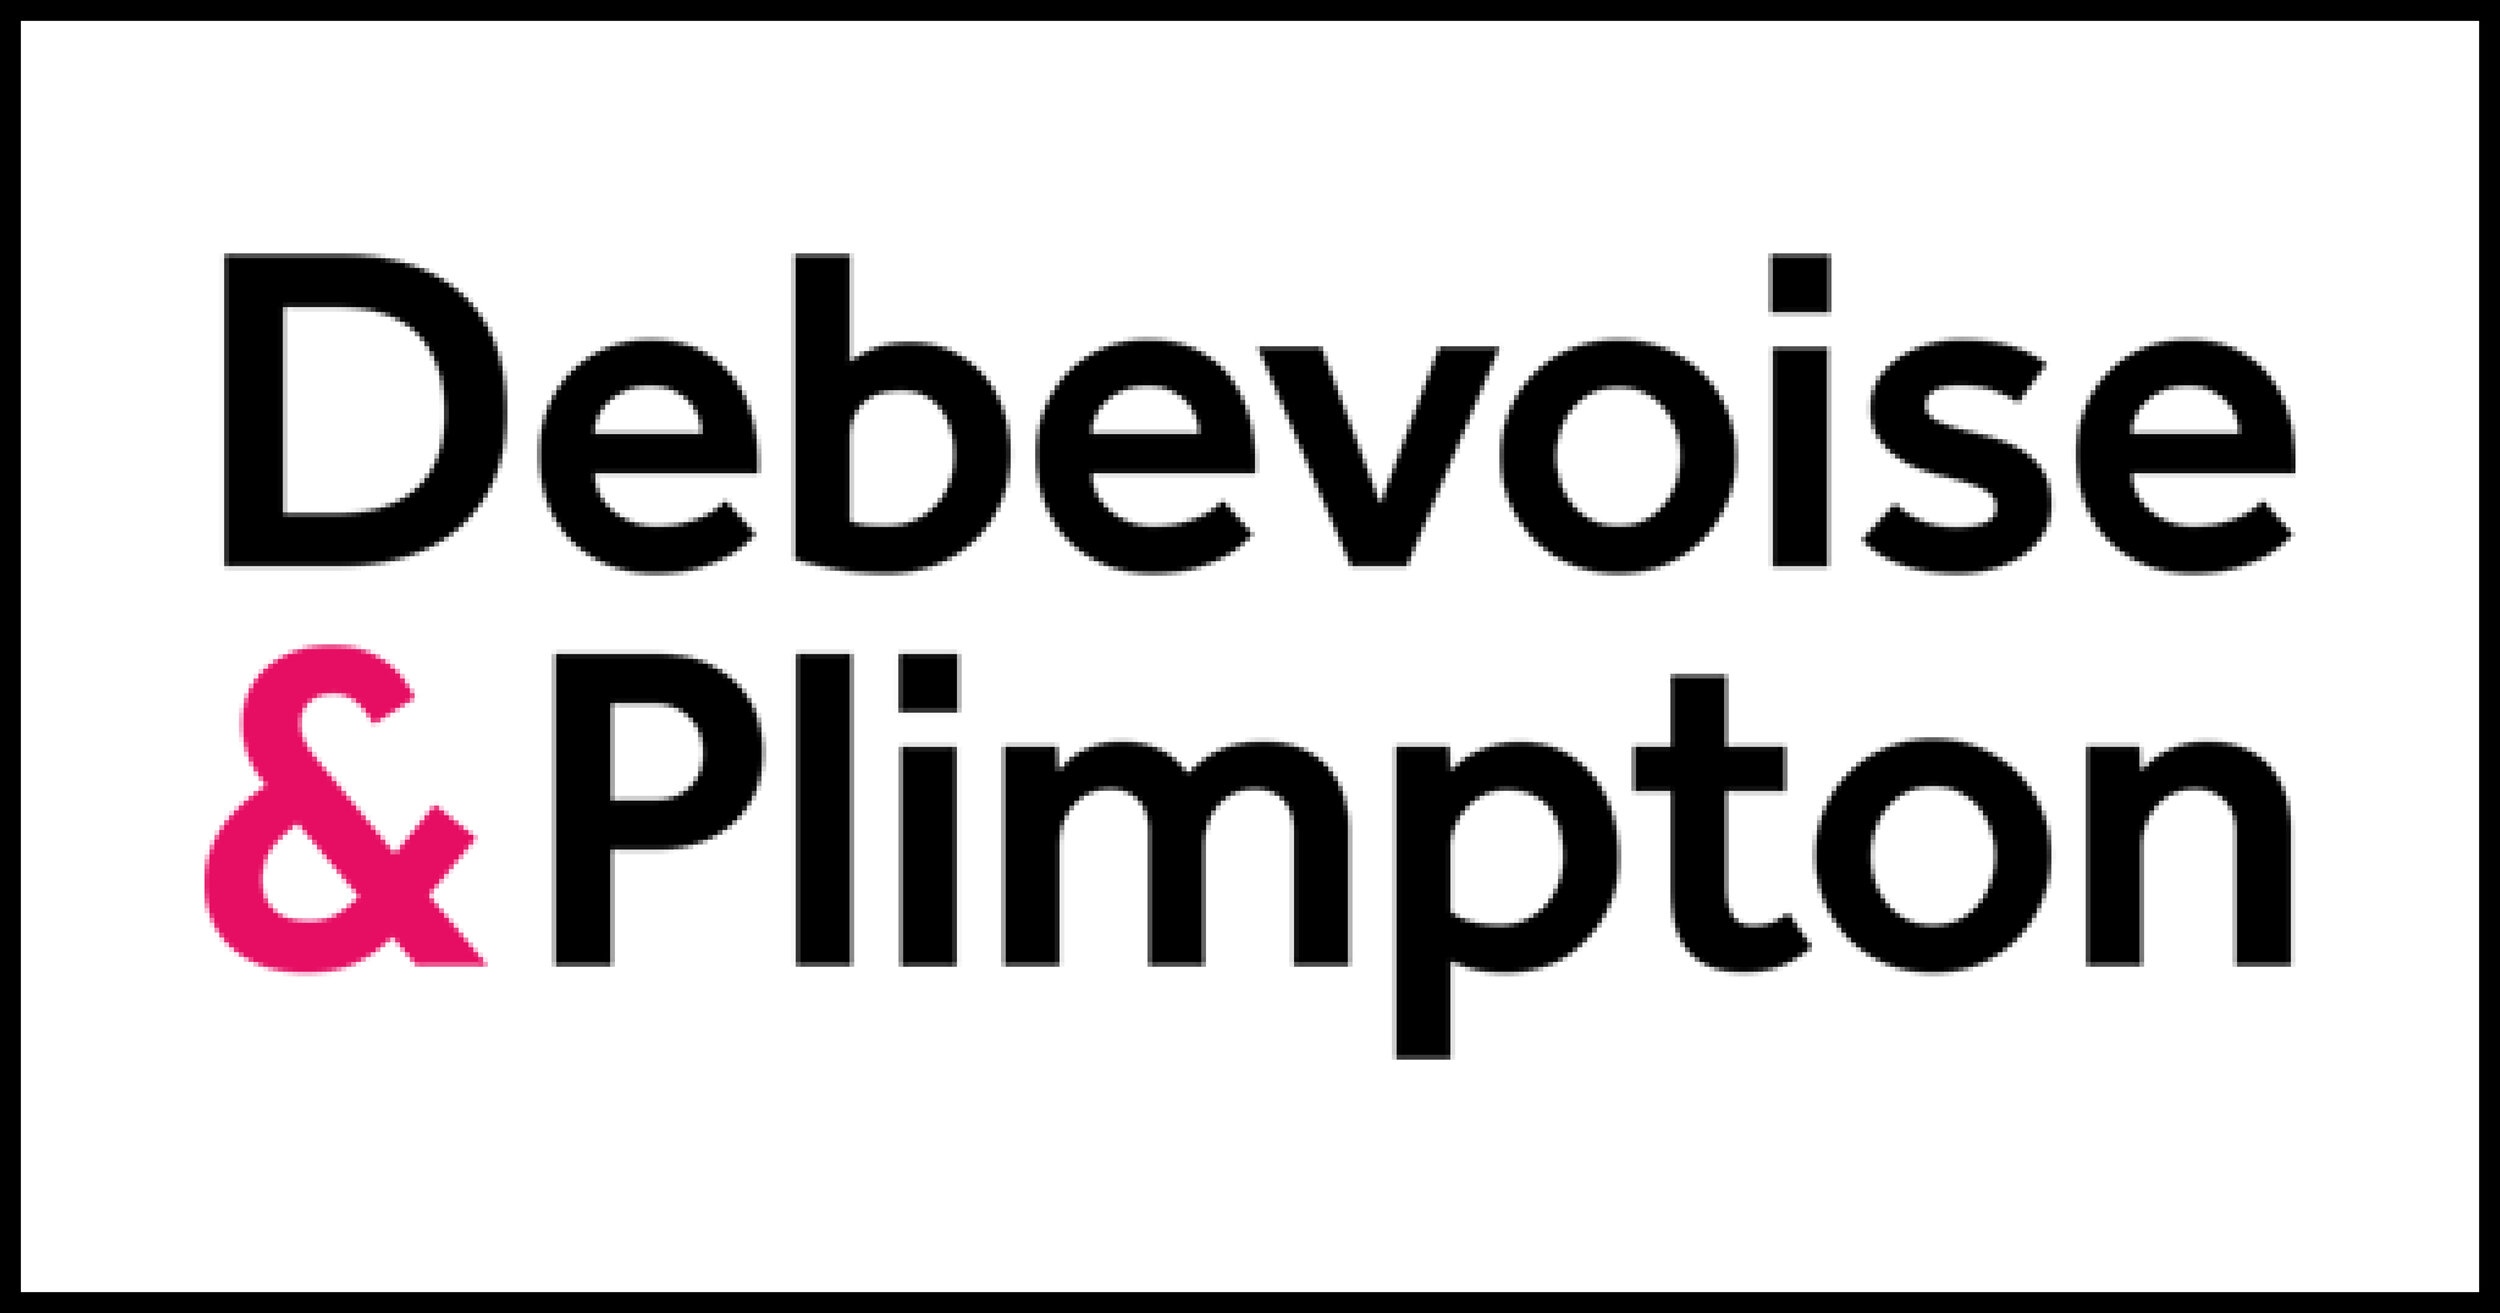 debevoise and plimton logo.jpg